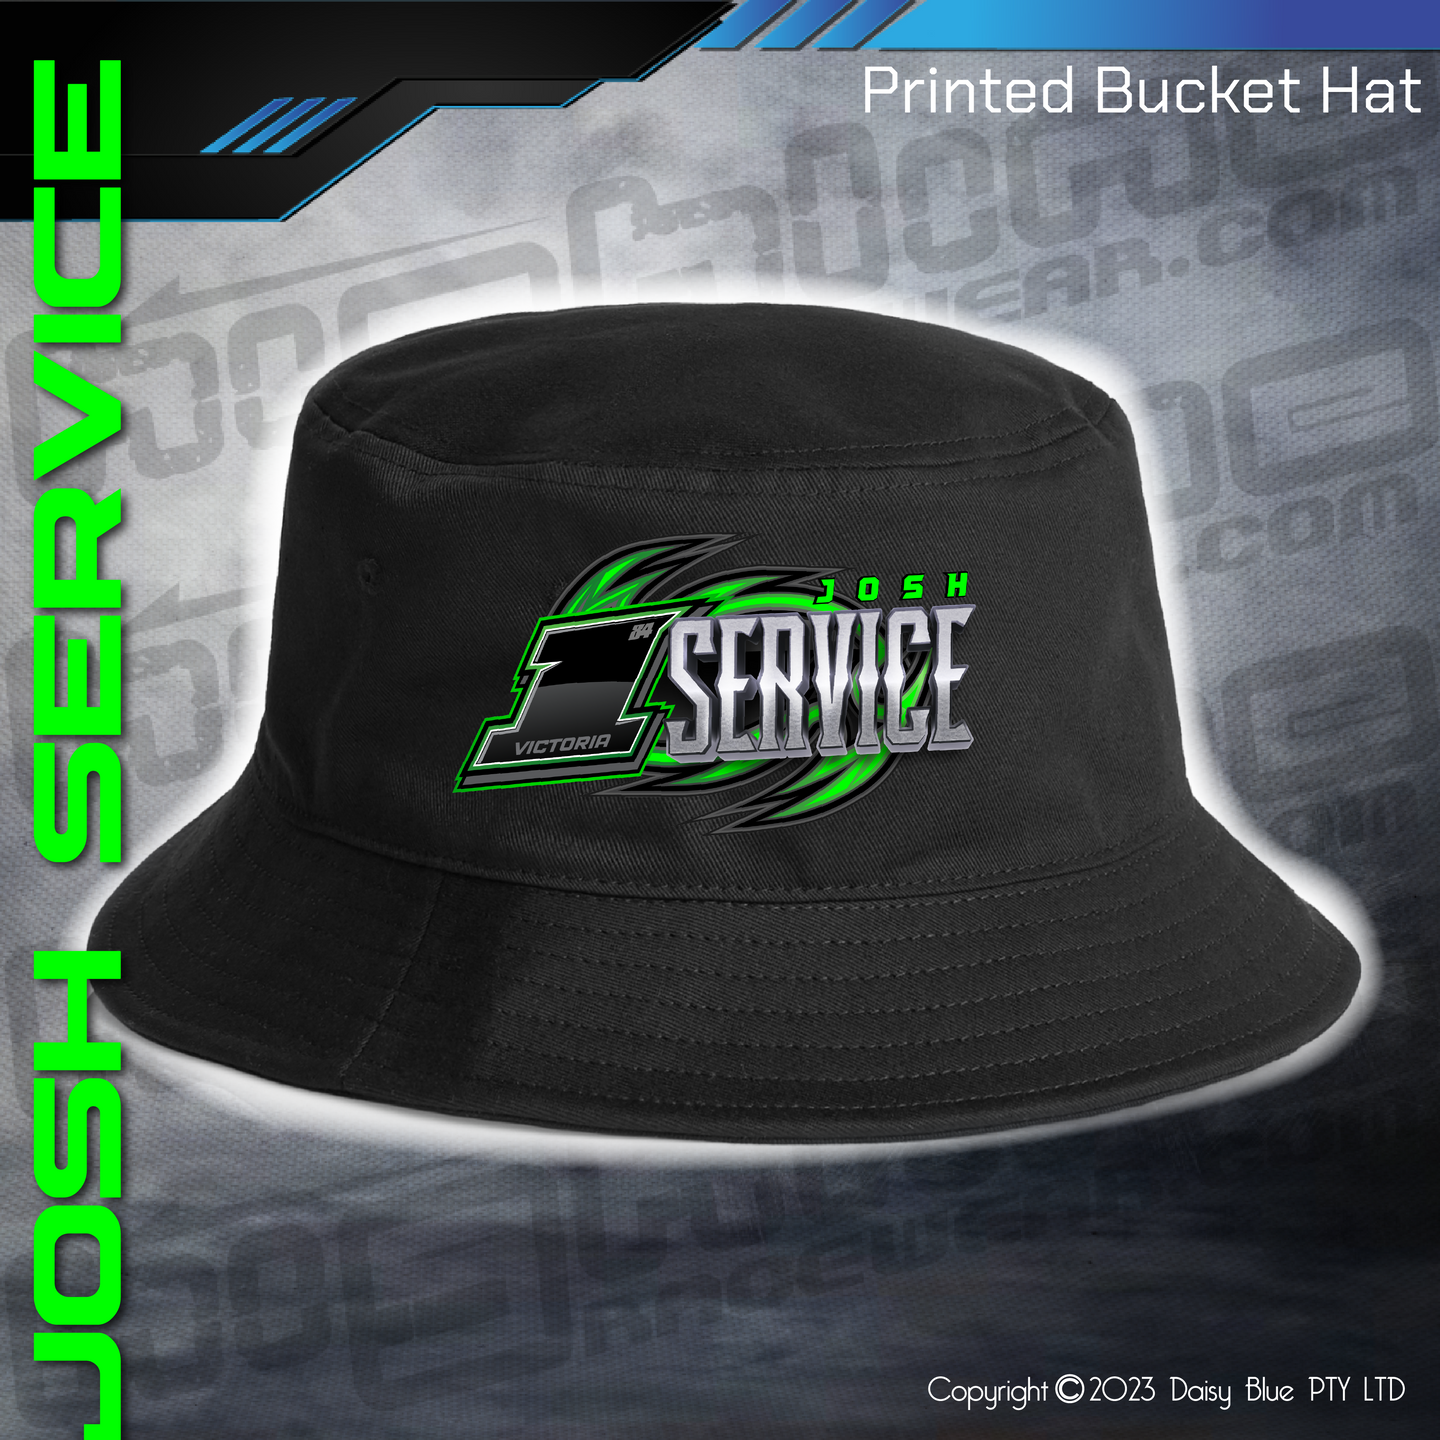 Printed Bucket Hat -  Josh Service